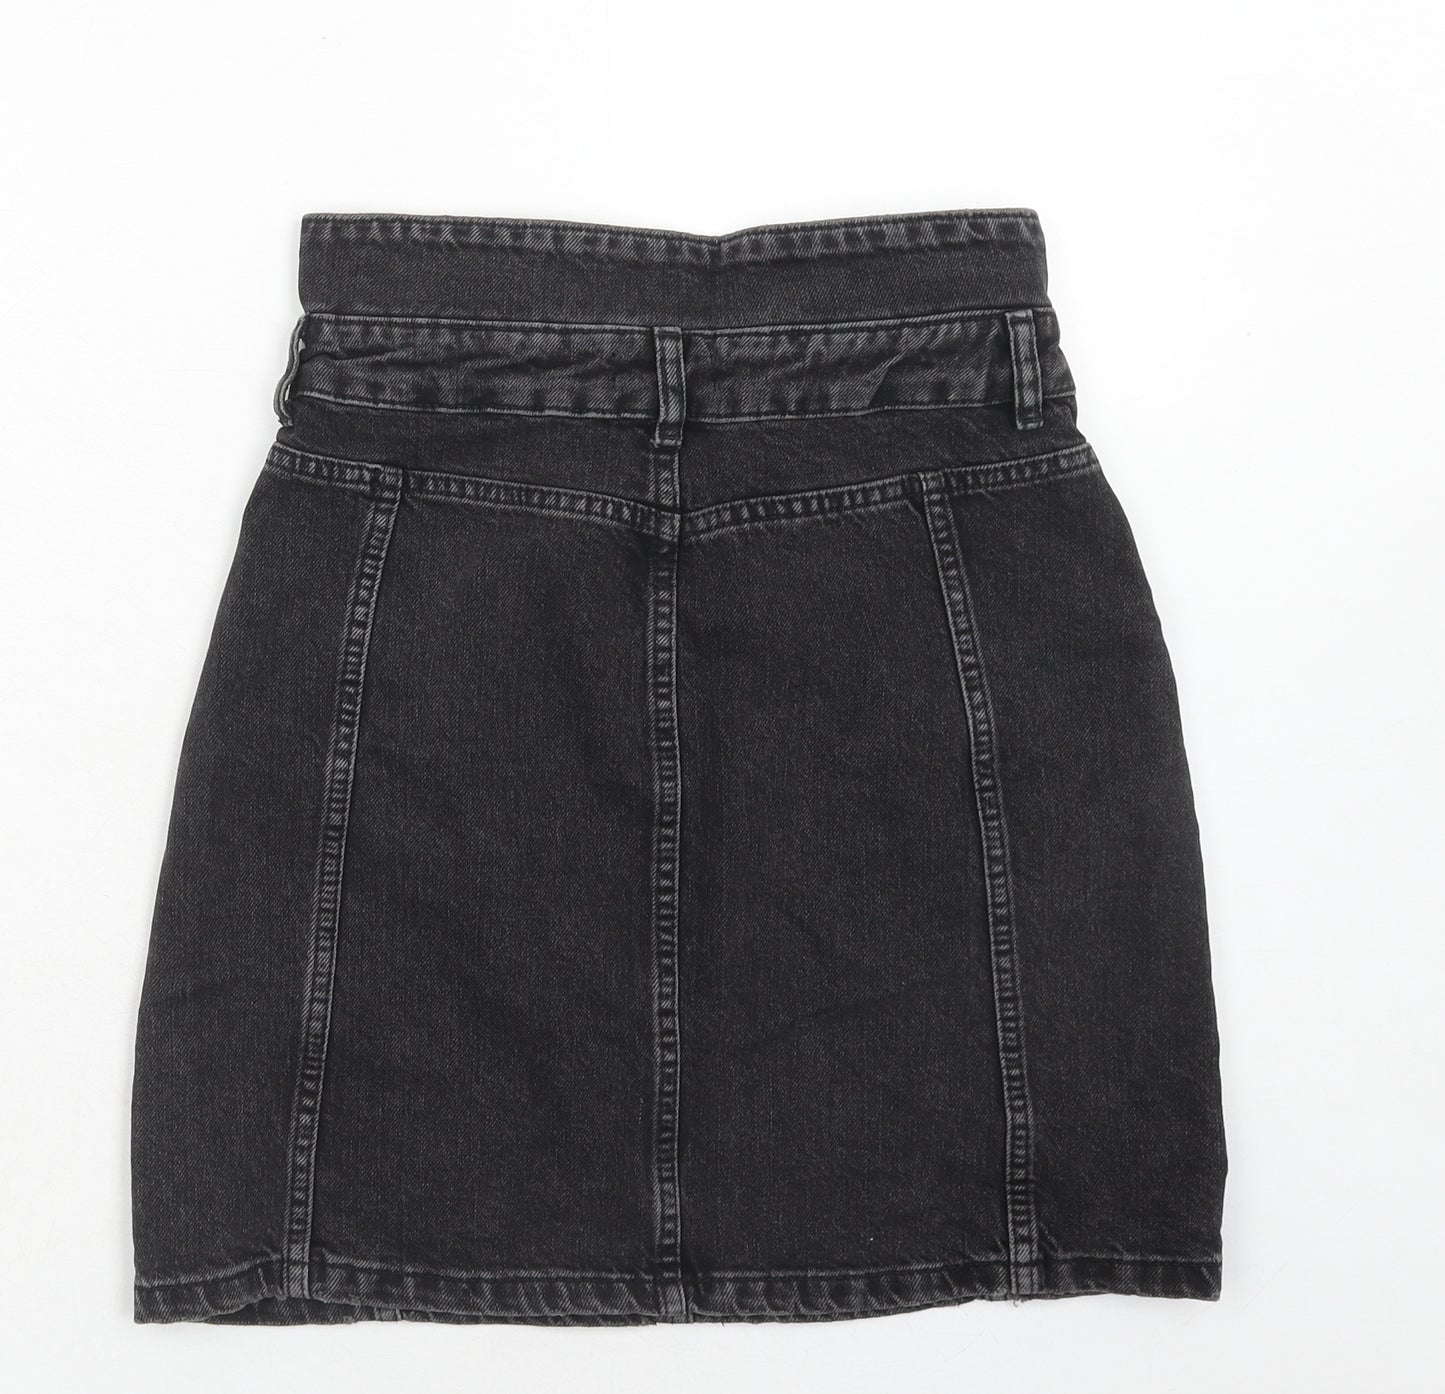 Topshop Womens Black Cotton A-Line Skirt Size 8 Zip